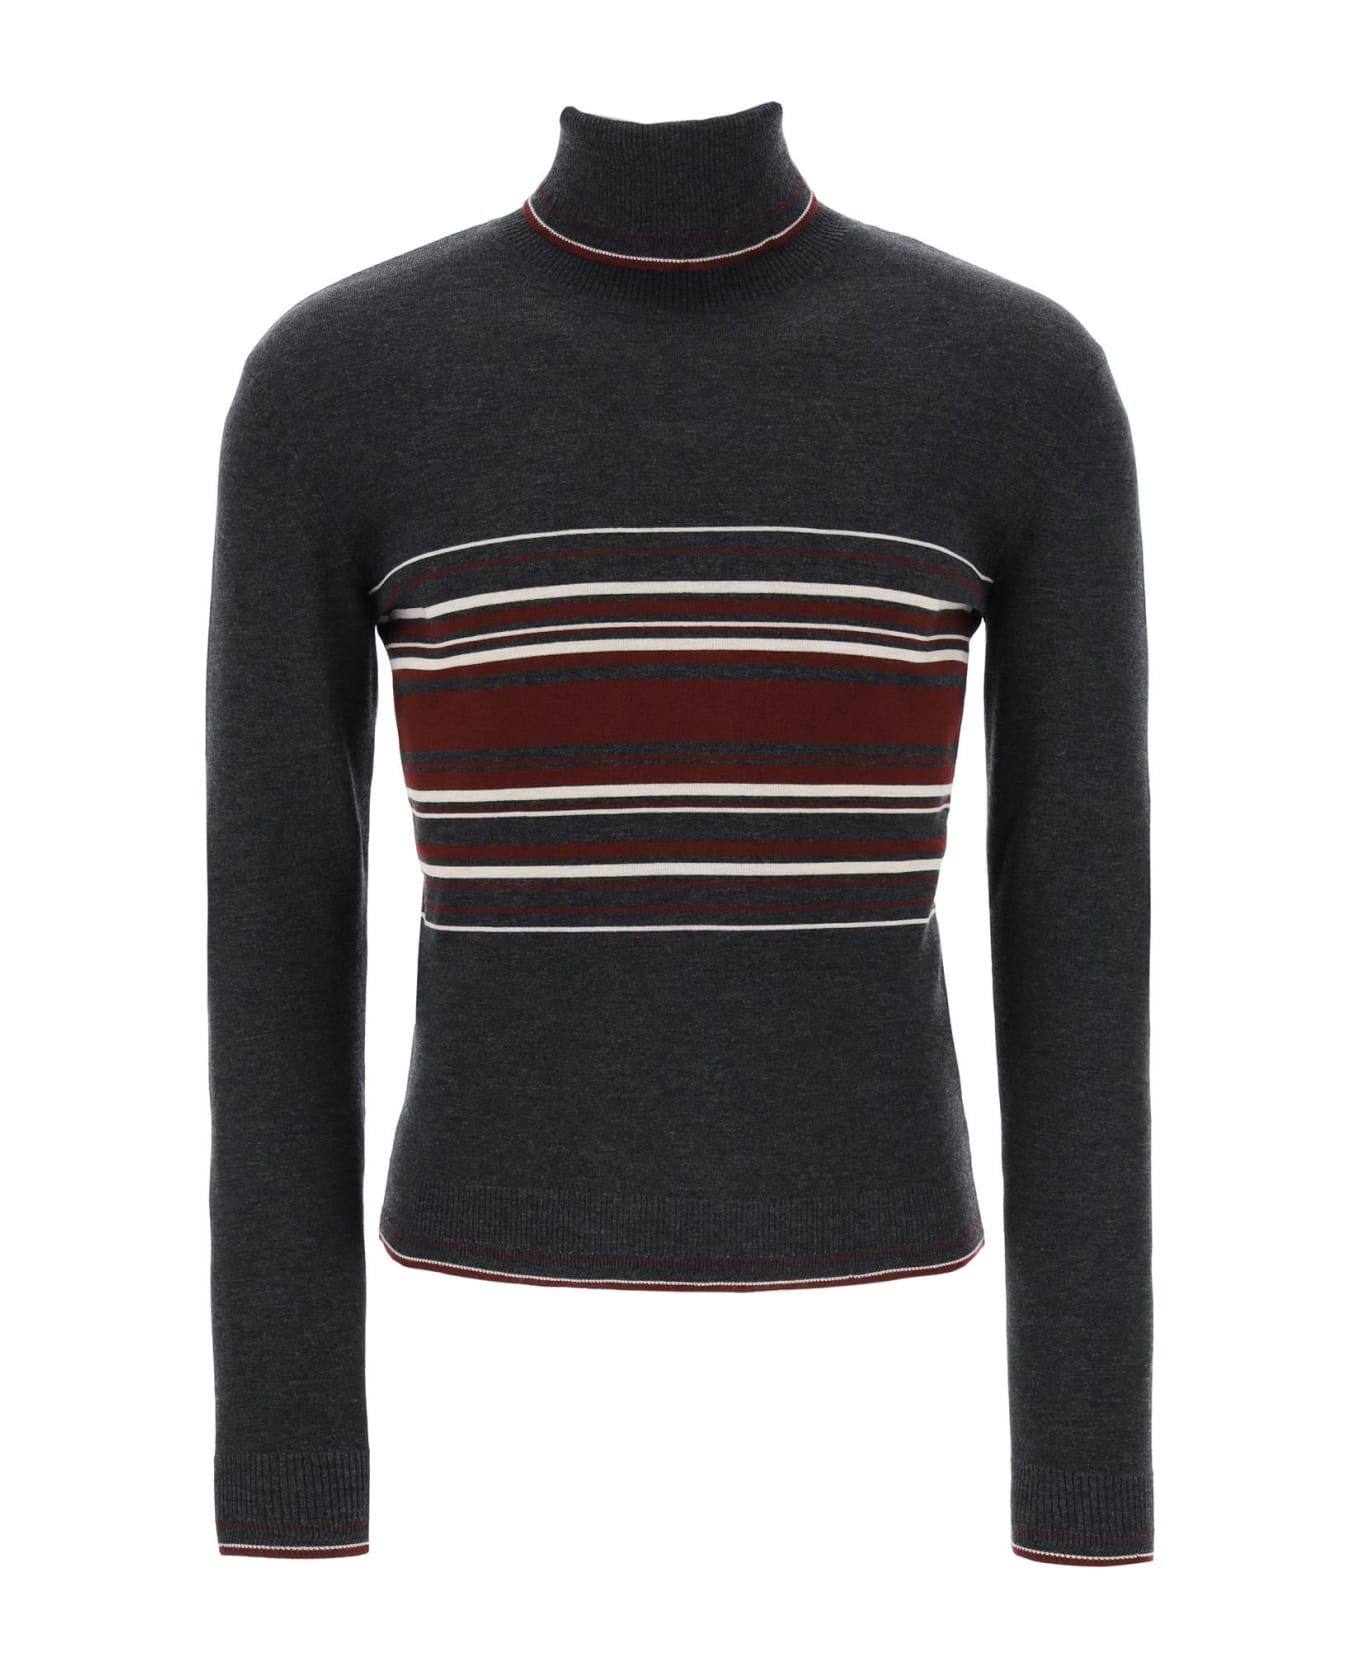 Dolce & Gabbana Striped Turtleneck Sweater - Variante Abbinata ニットウェア